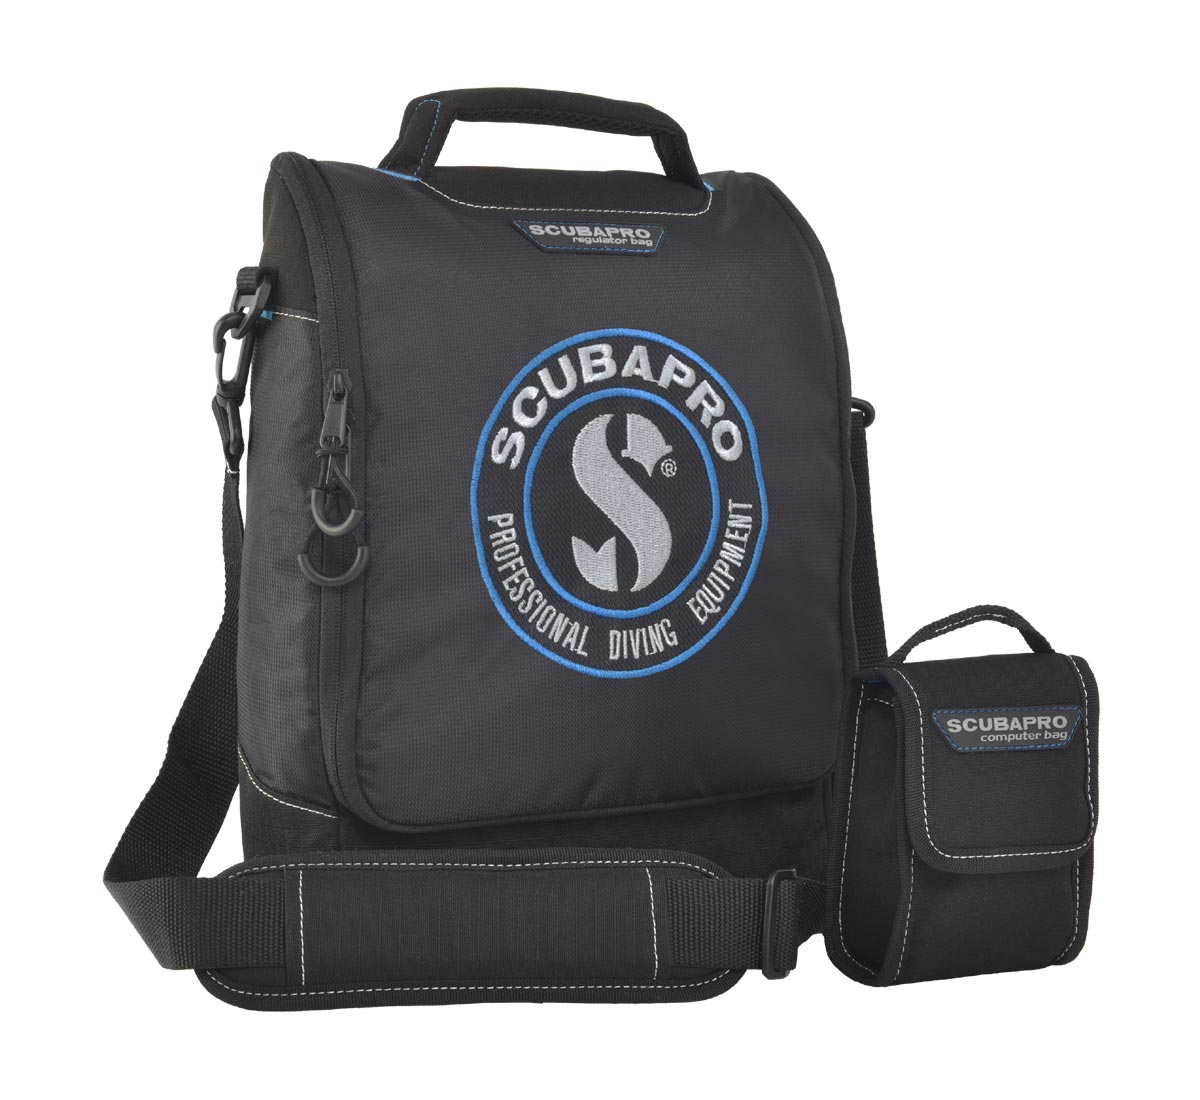 SCUBAPRO - Regulator and Computer Bag